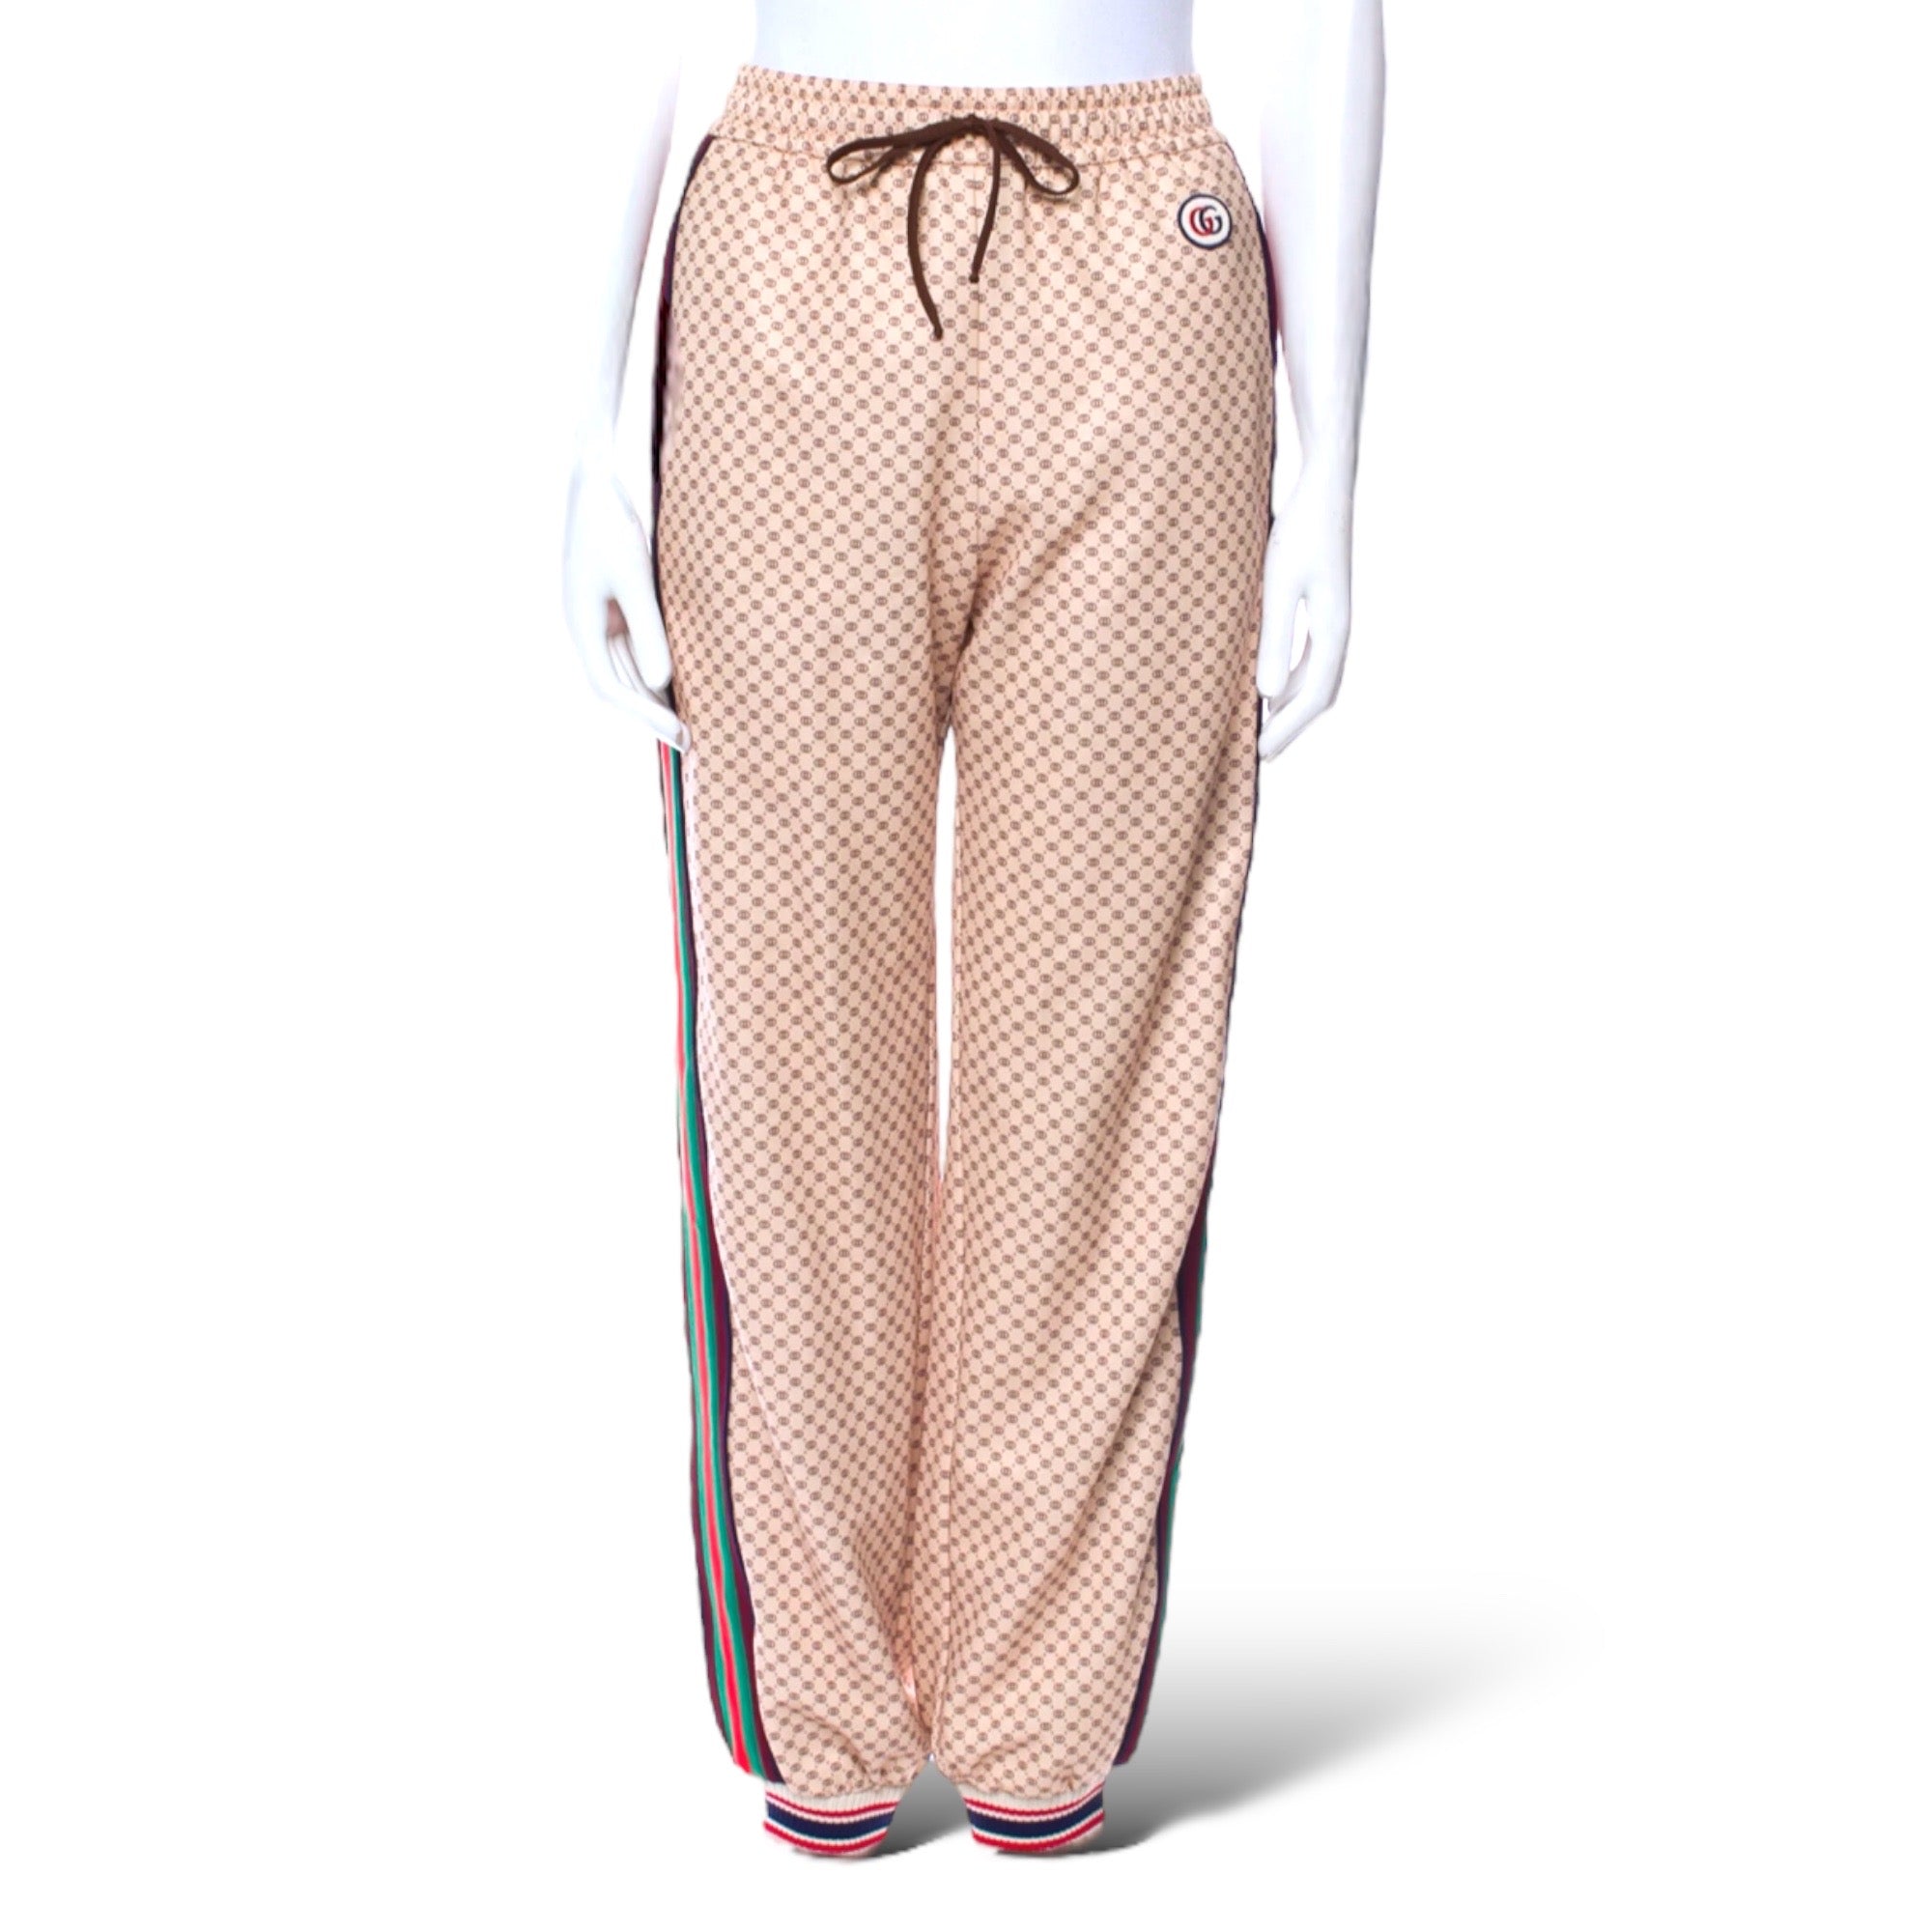 GUCCI Printed Sweatpants
| Size: XS |